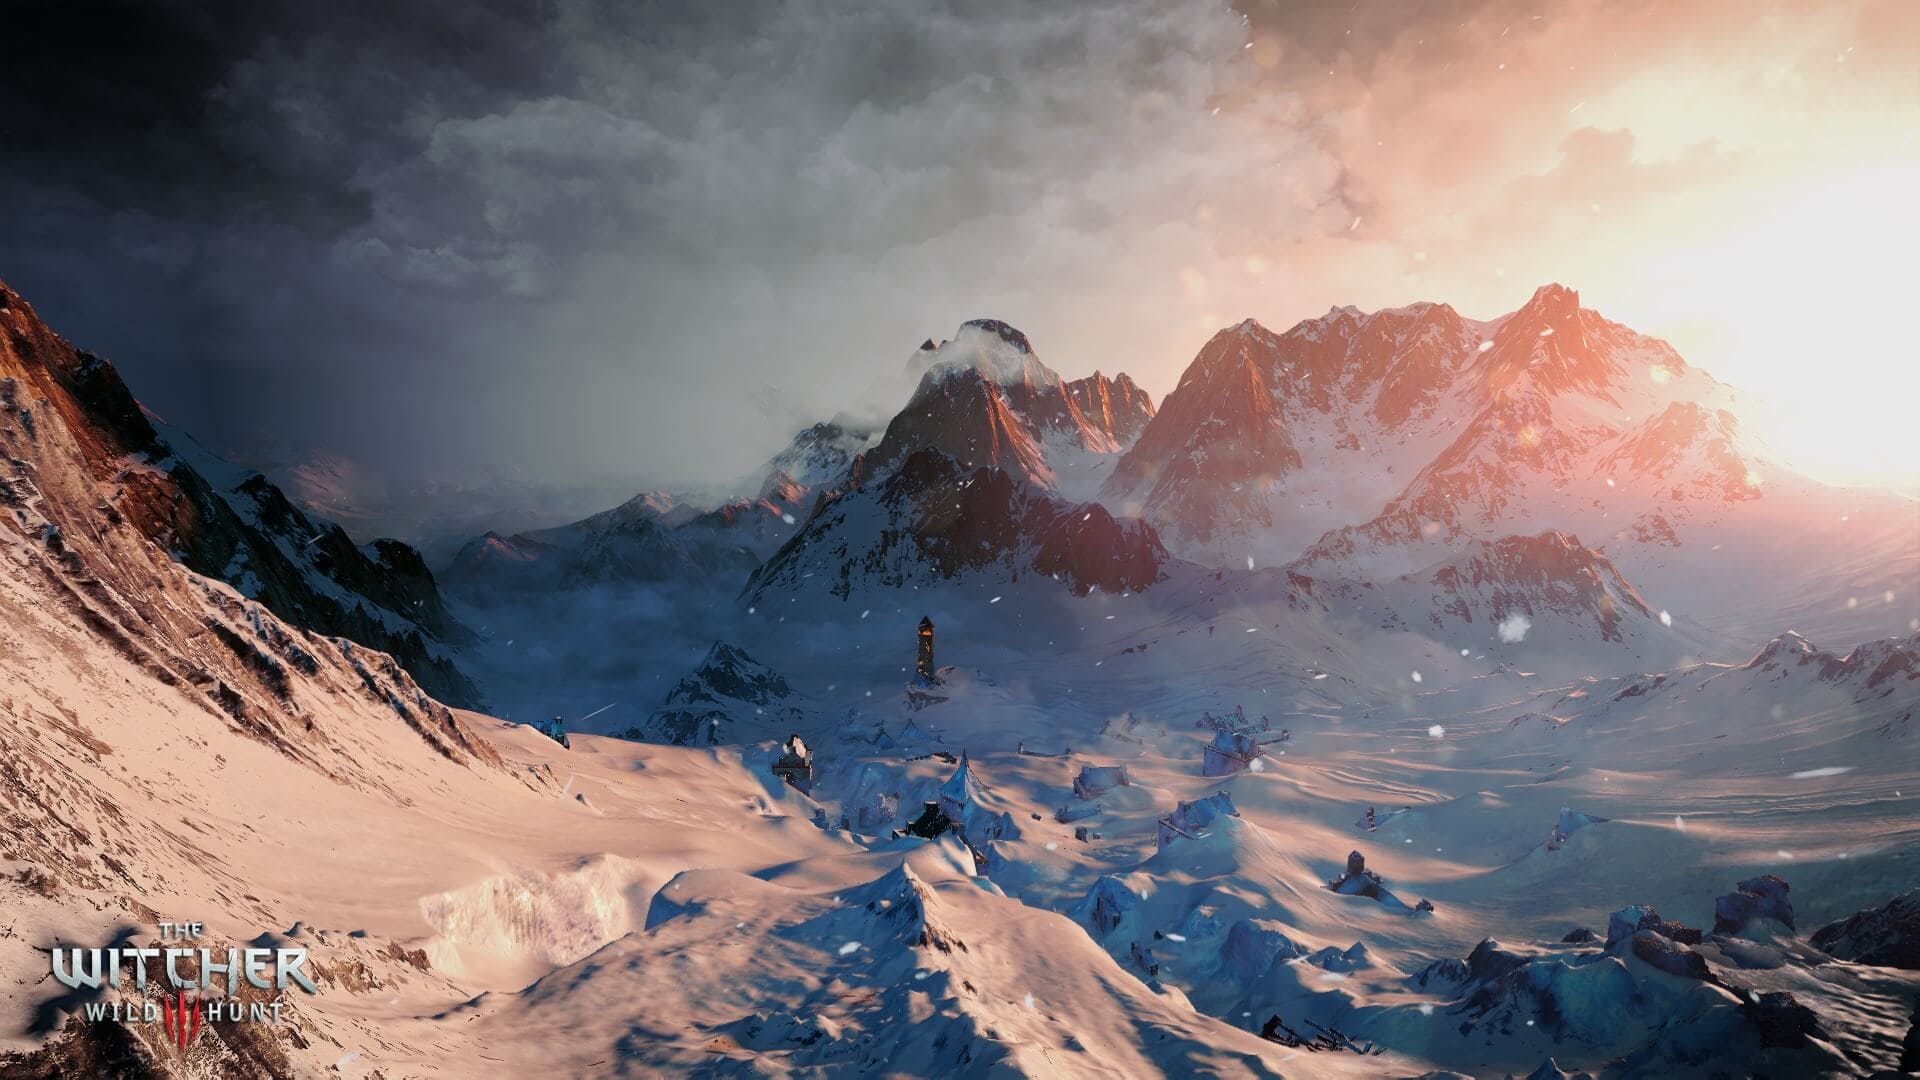 The Witcher 3: Wild Hunt Snow Environment Screenshot